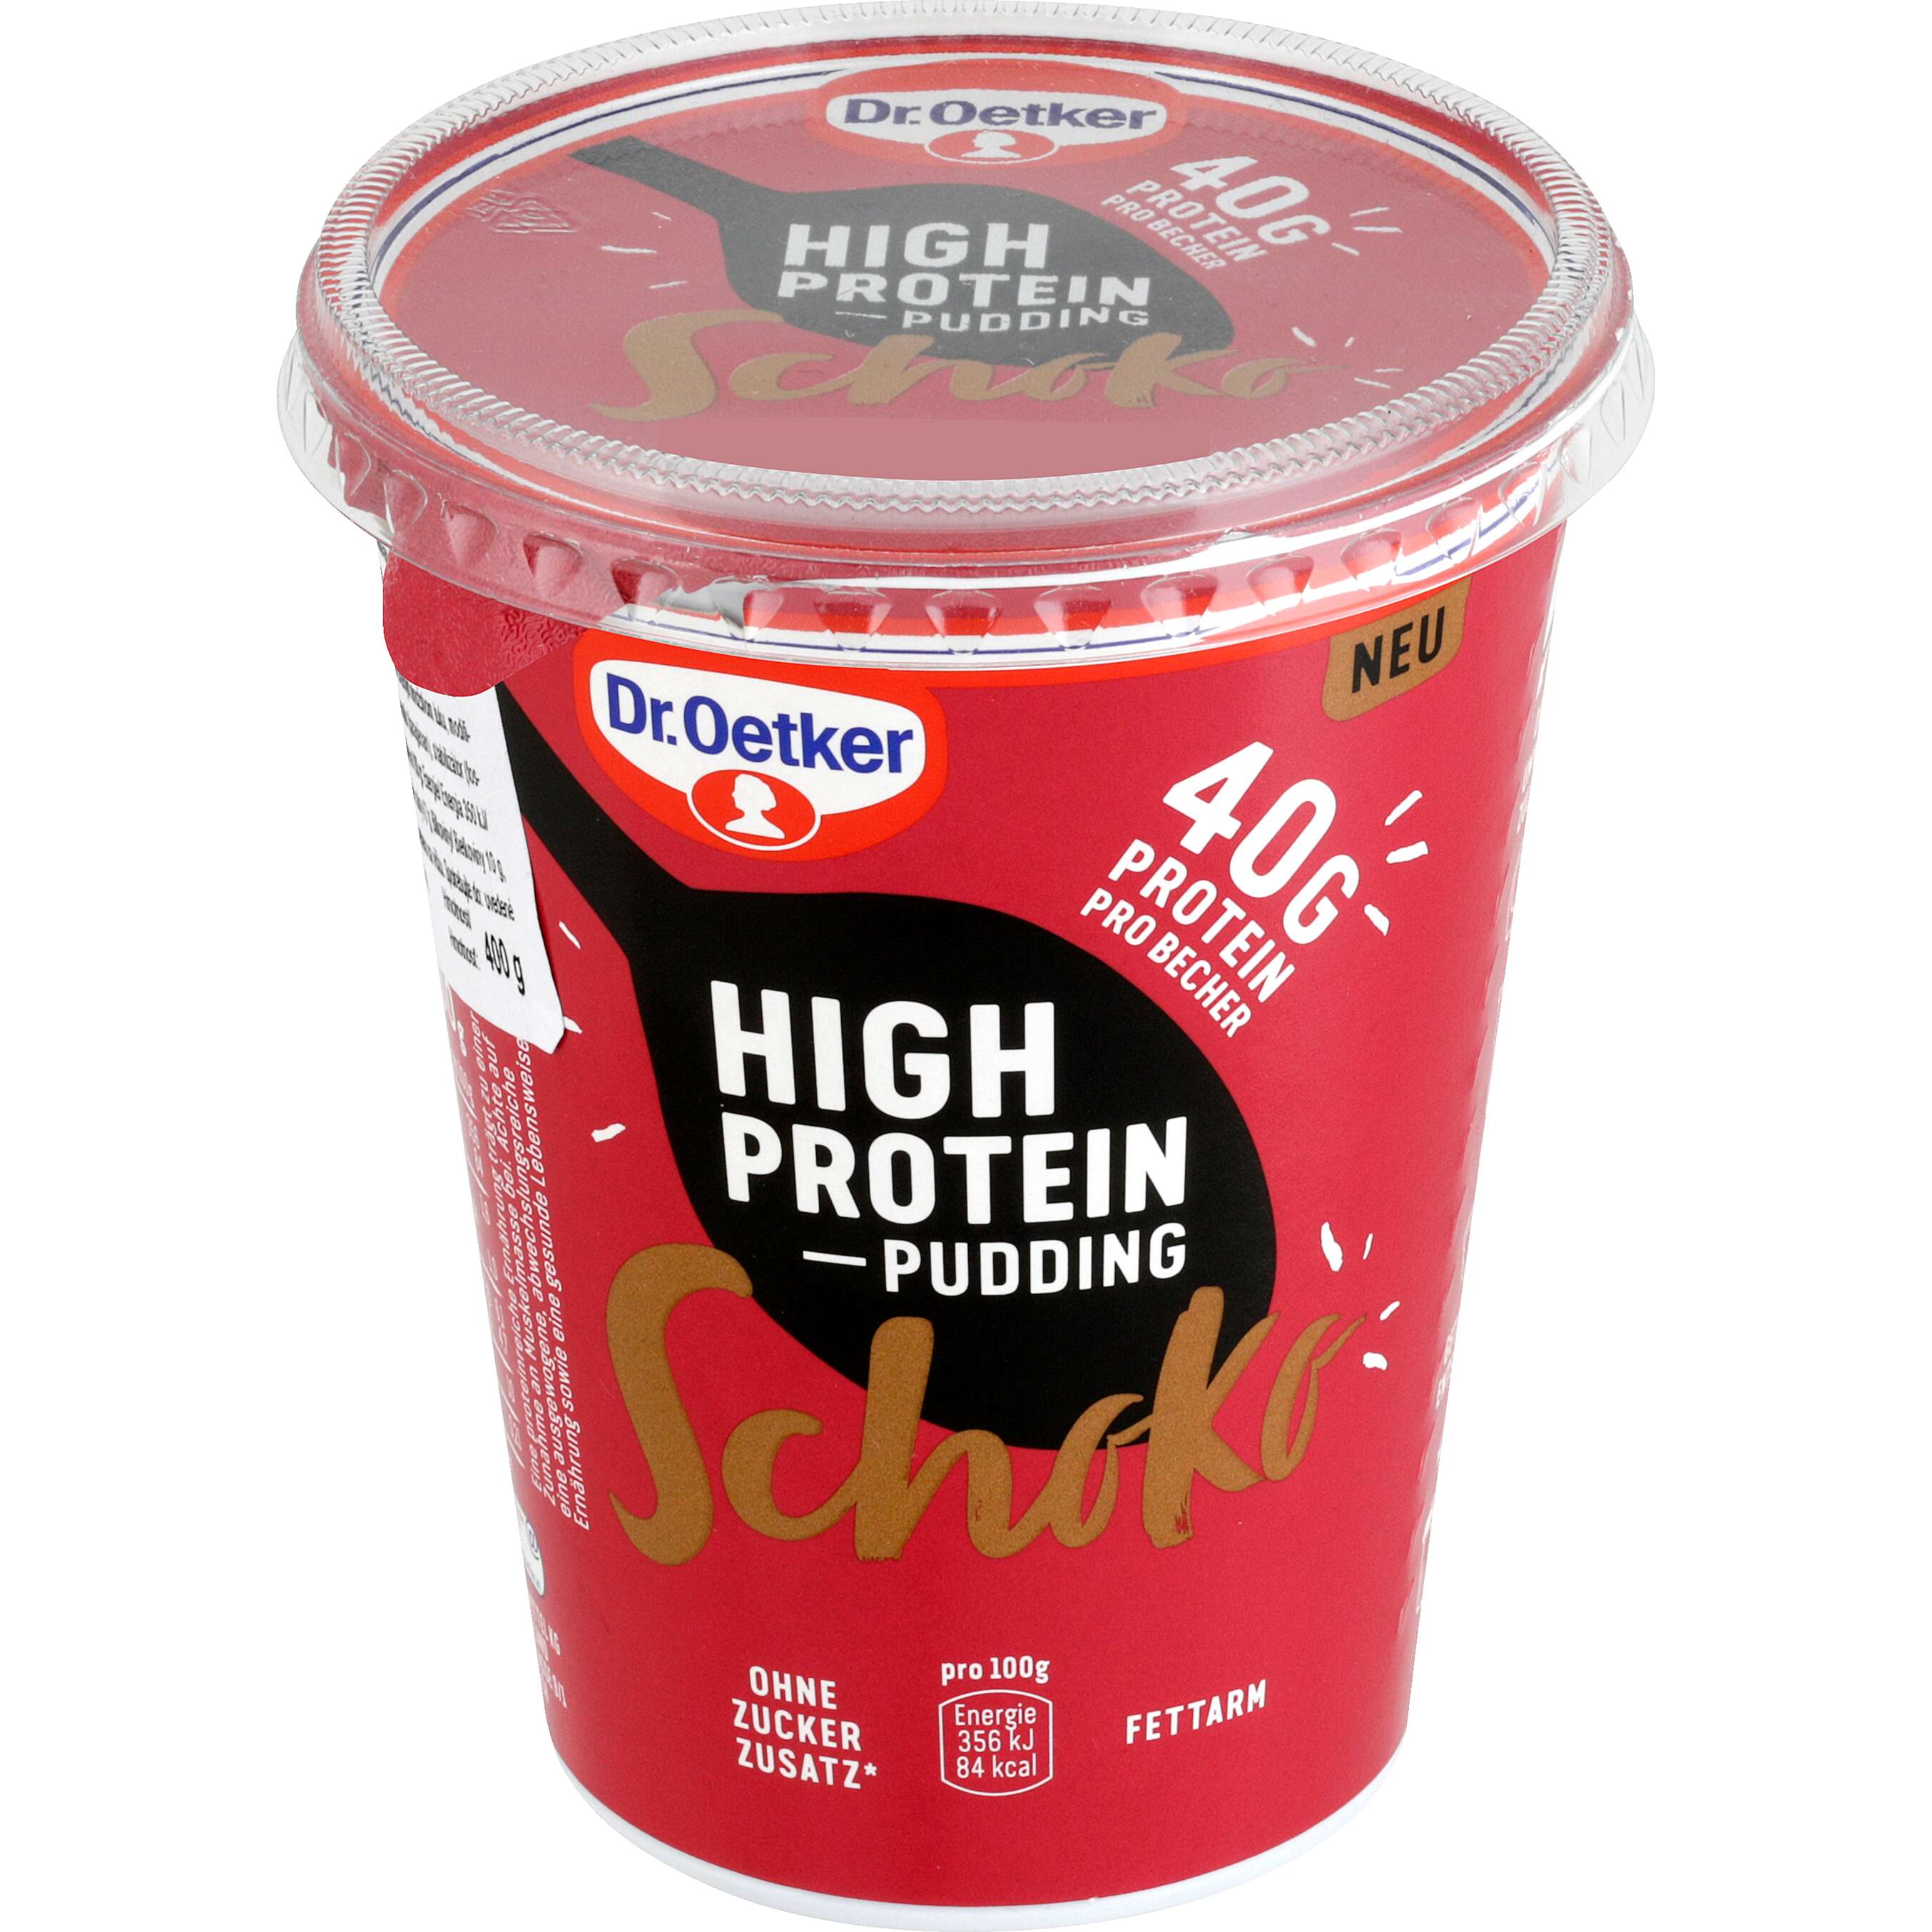 Zobrazit nabídku Dr.Oetker High Protein Pudding